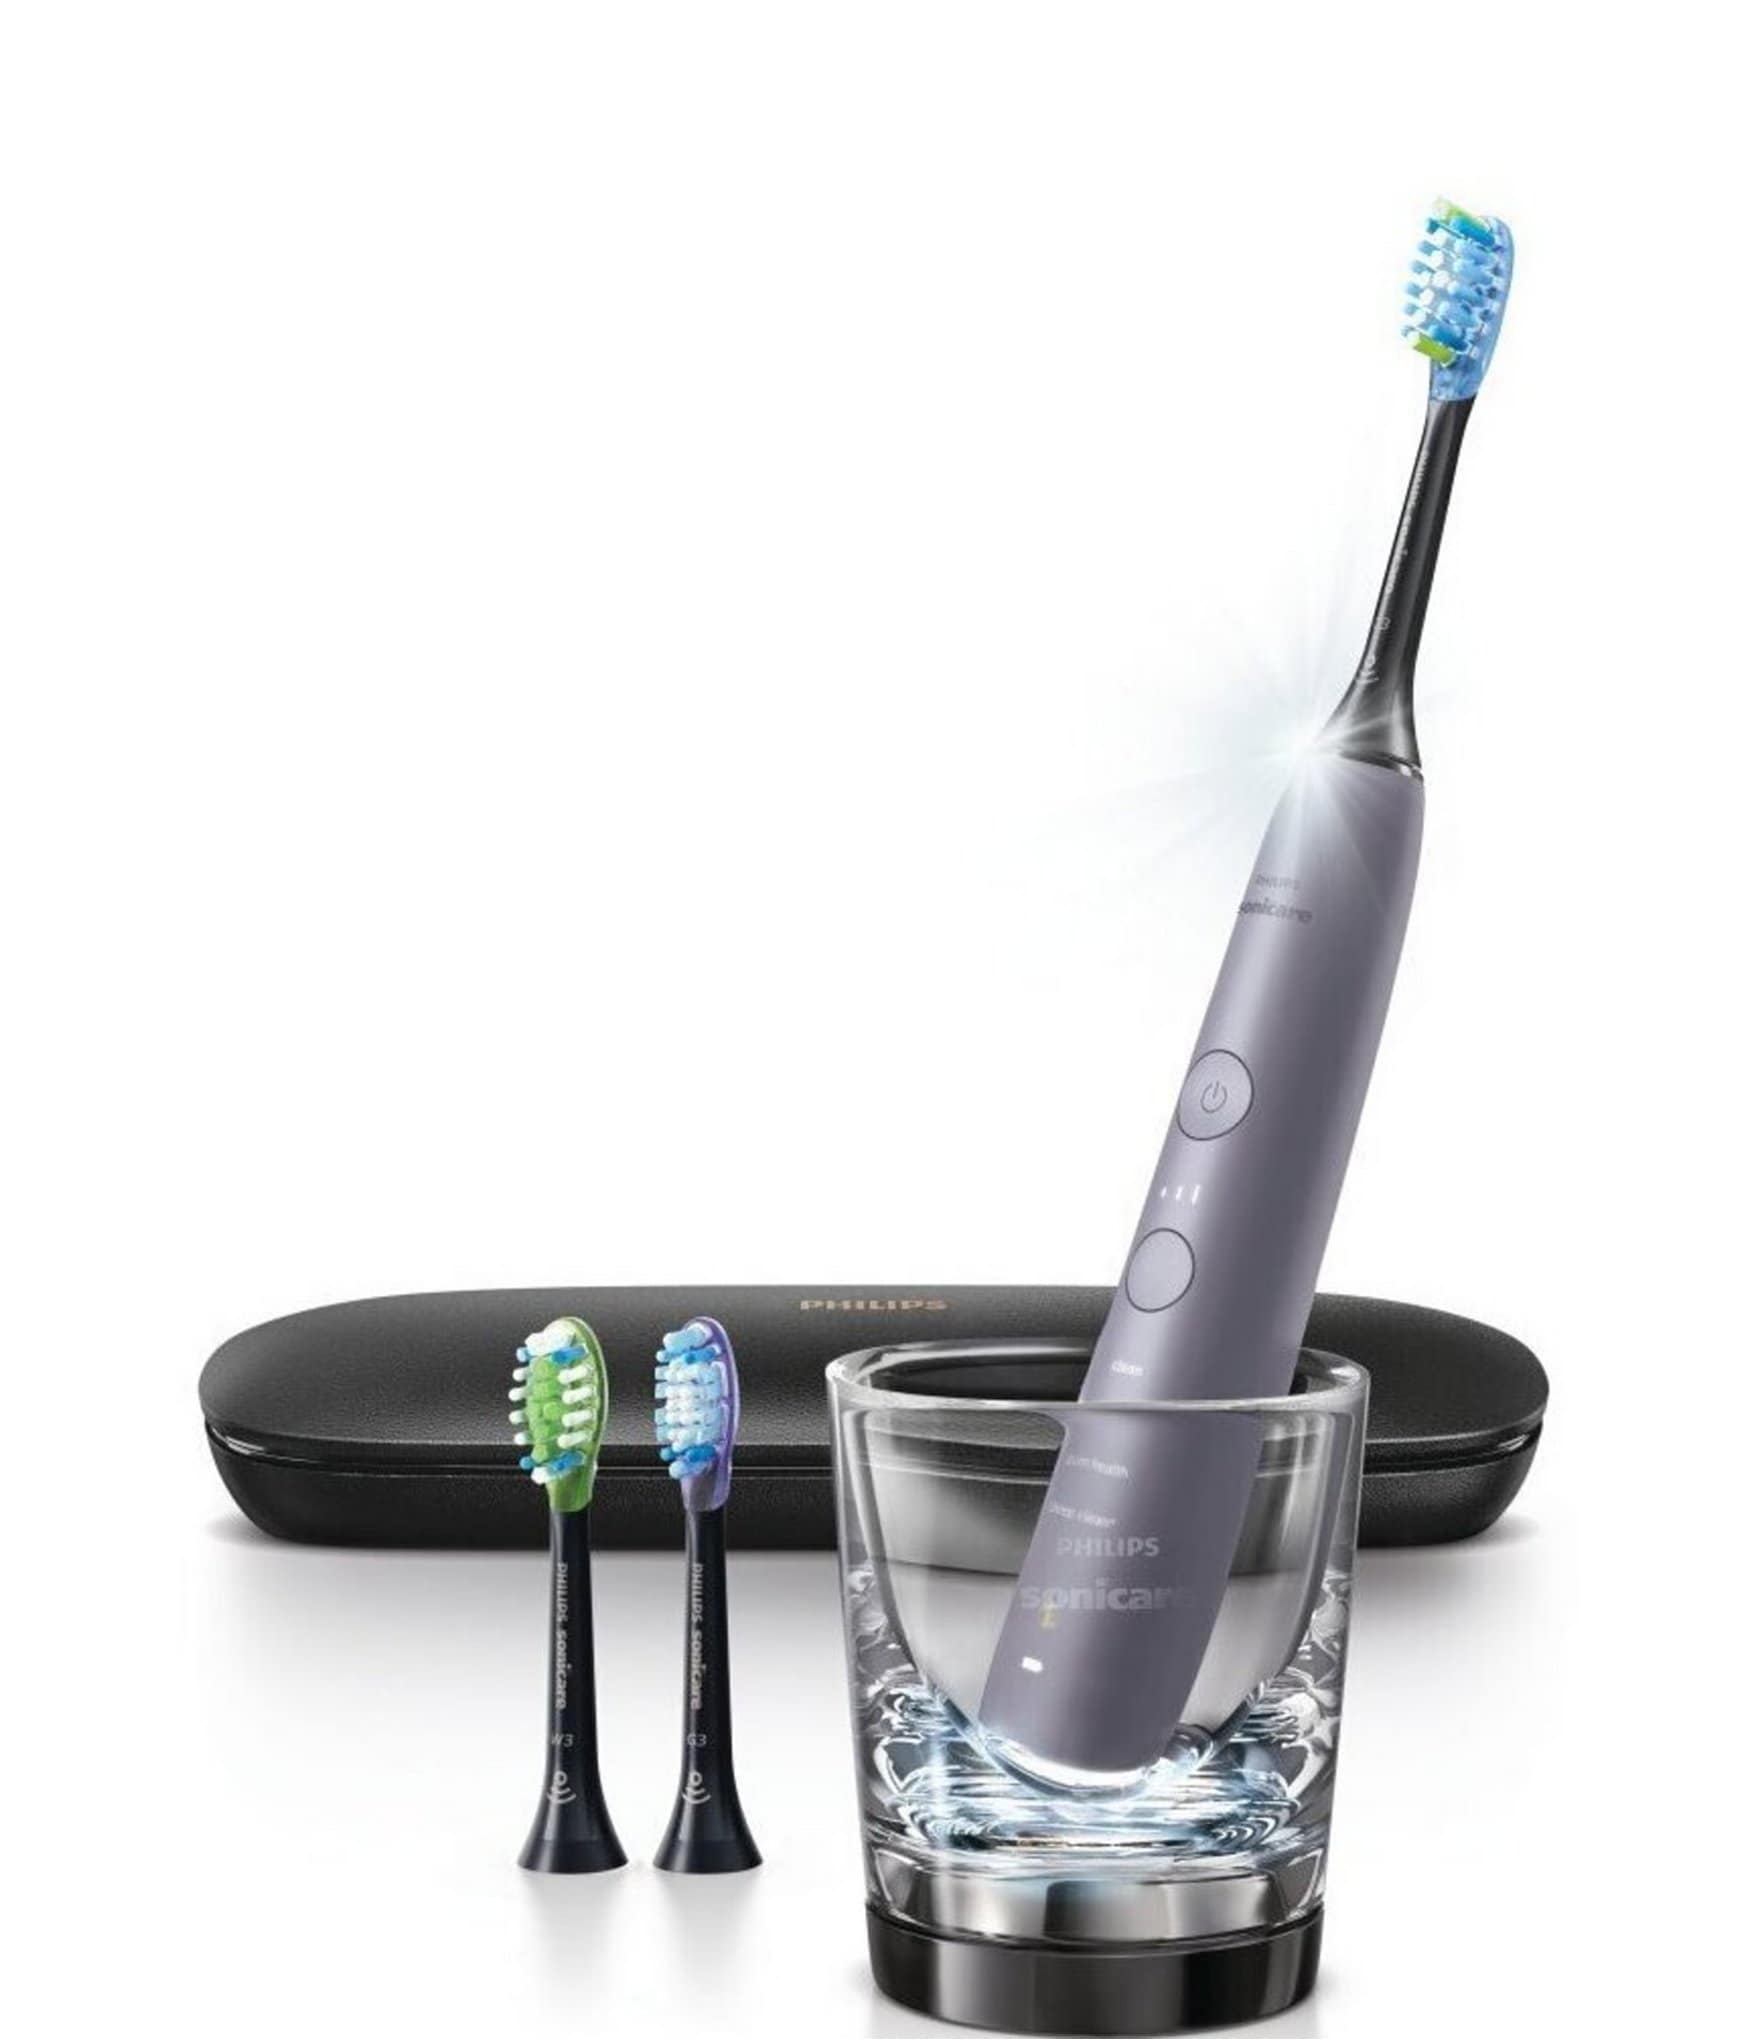 Philips Sonicare DiamondClean Smart 9300 Electric Toothbrush Dillard's